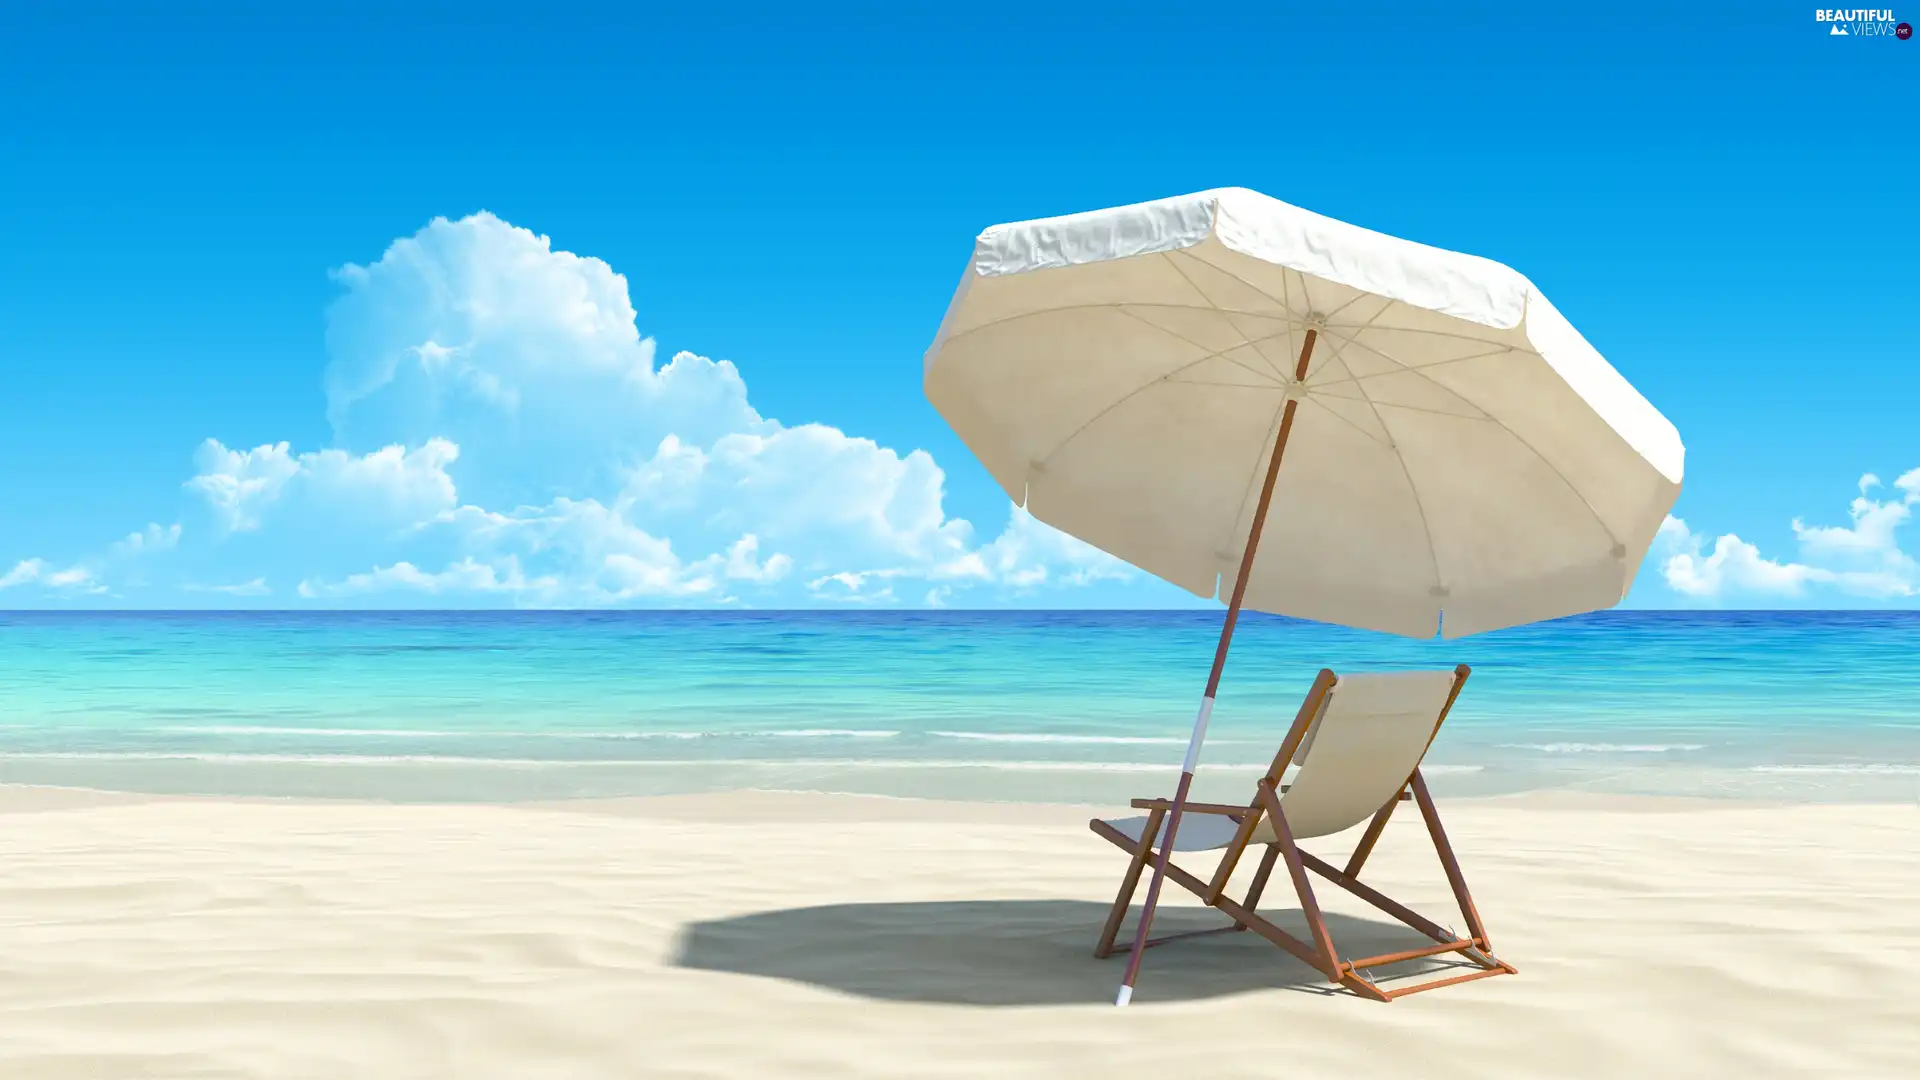 Beaches, Sky, hammock chair, holiday, Umbrella, sea